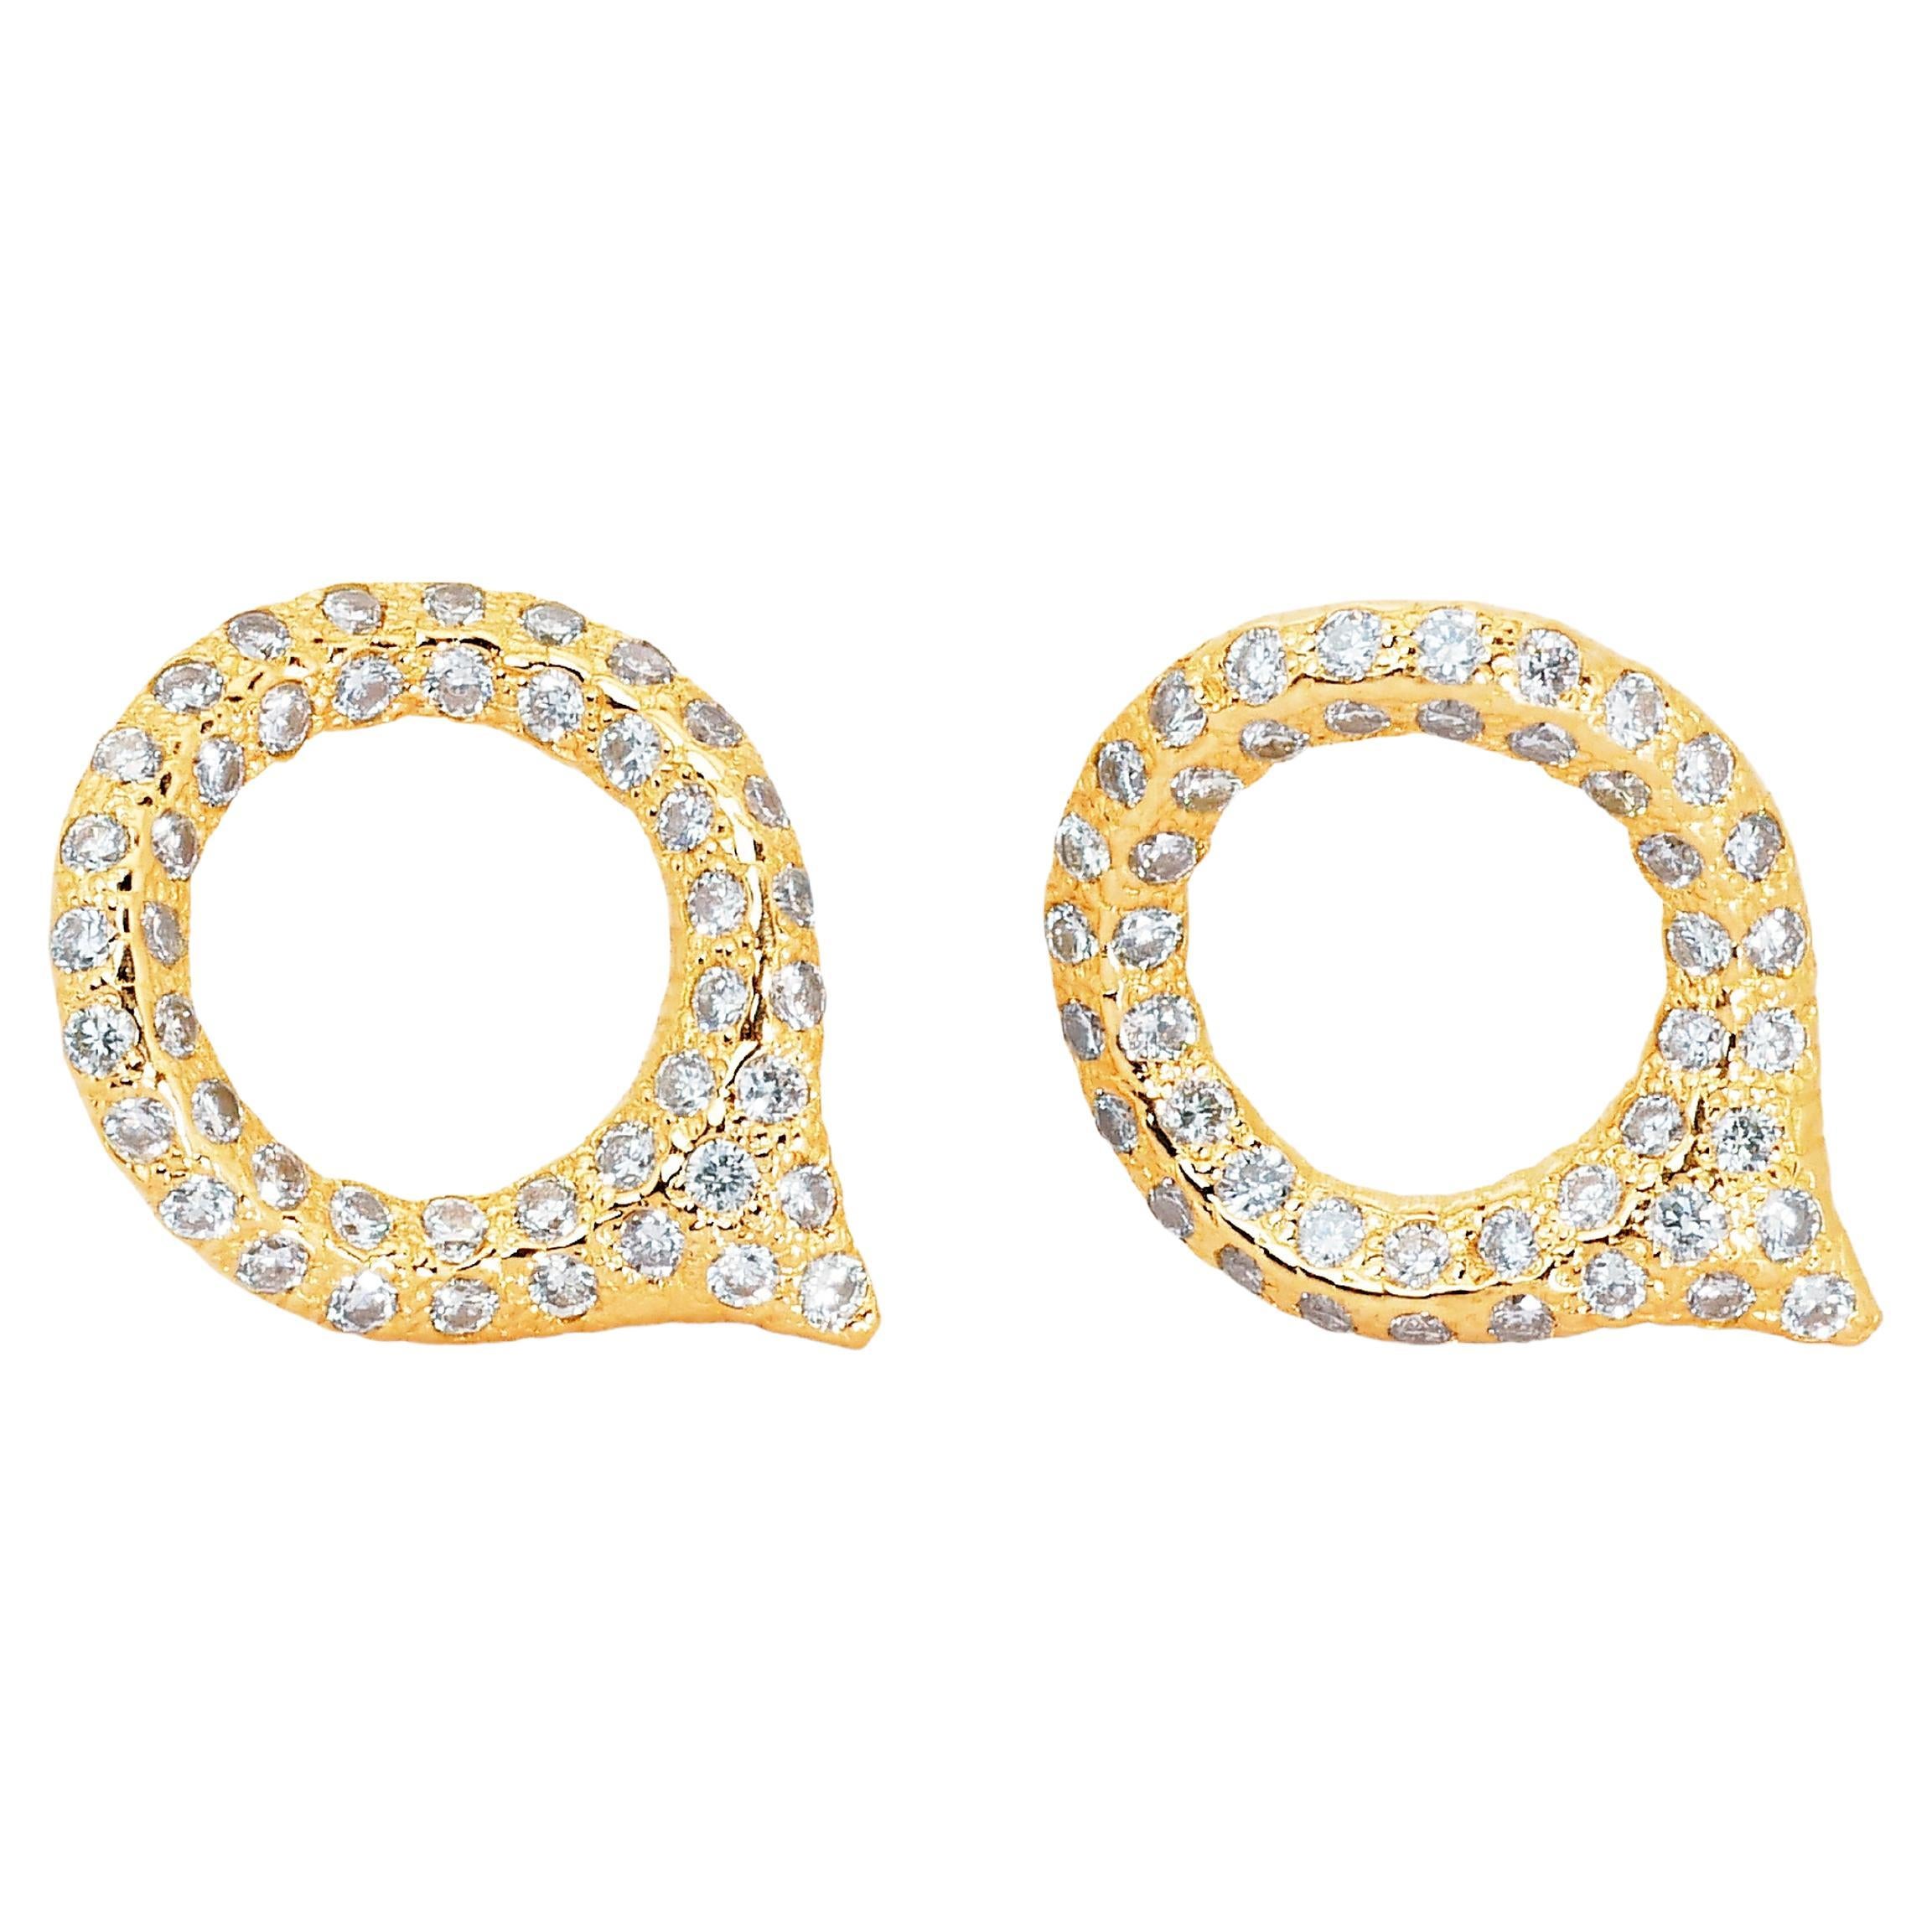 Glamorous 18k Yellow Gold Earrings w/ 1.28ct Natural Diamonds IGI Certificate